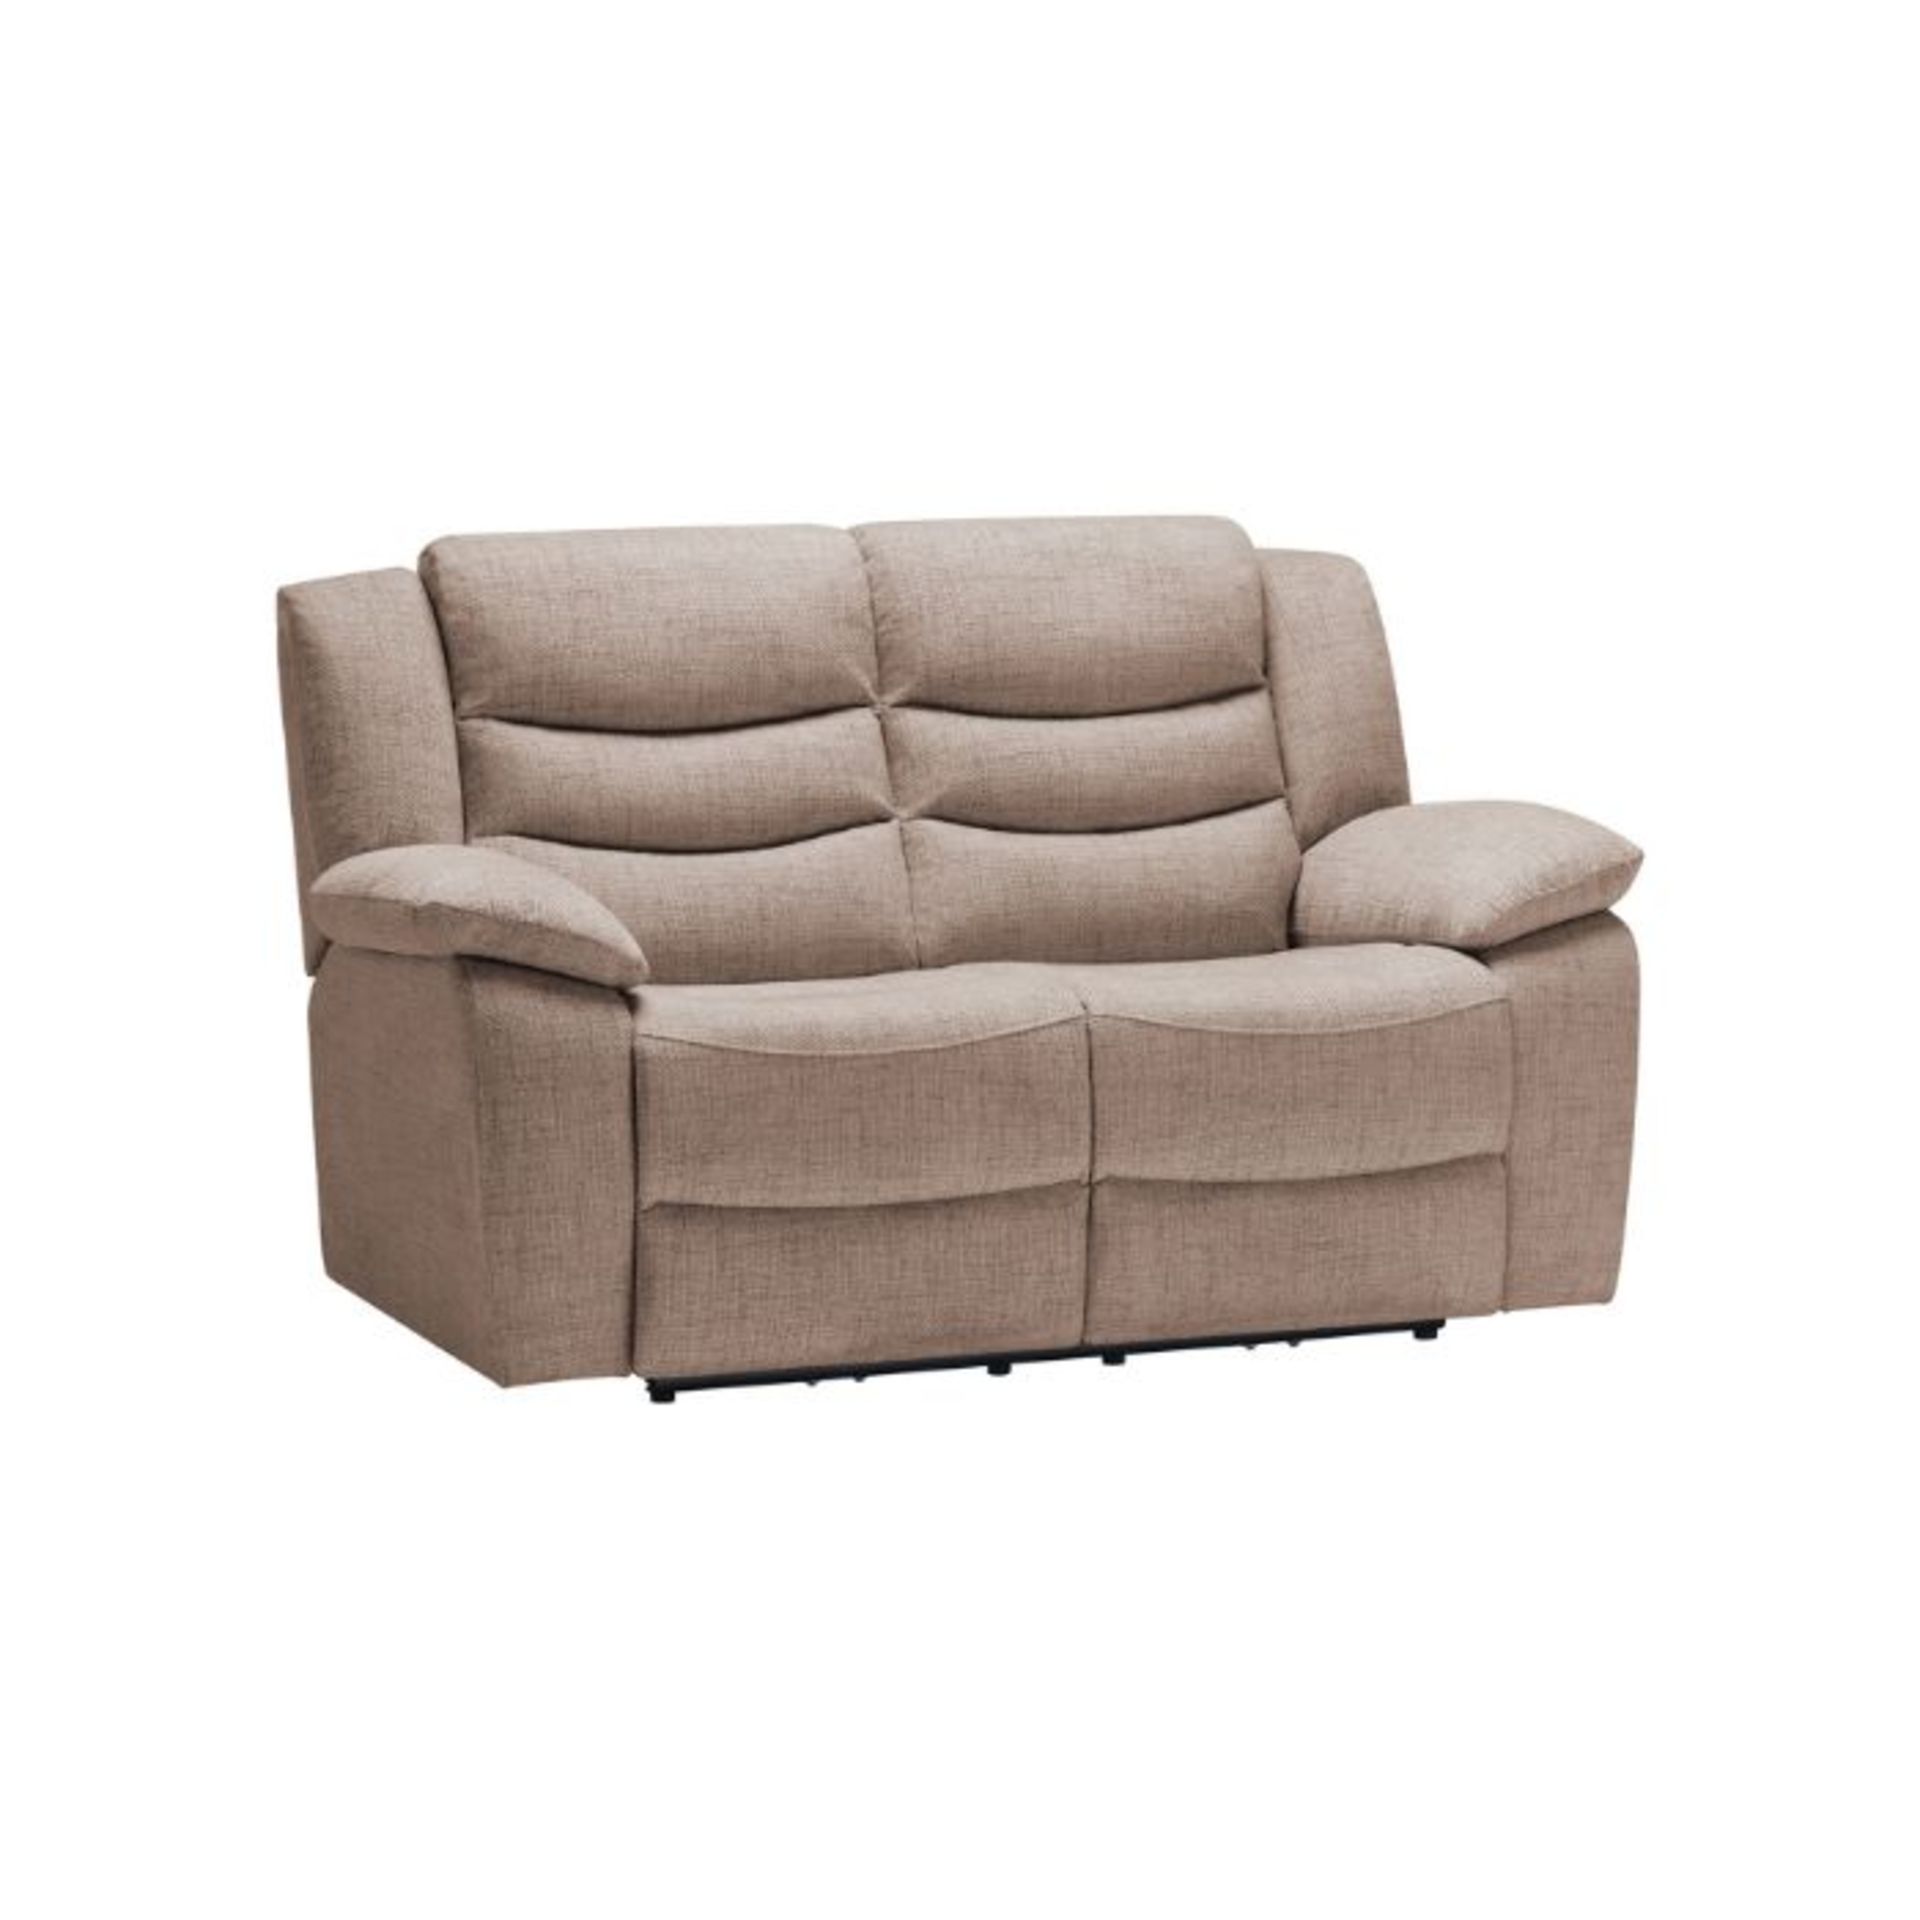 Oak Furnitureland Marlow 2 Seater Sofa In Dorset Beige Fabric RRP œ849.99 Our Marlow range is